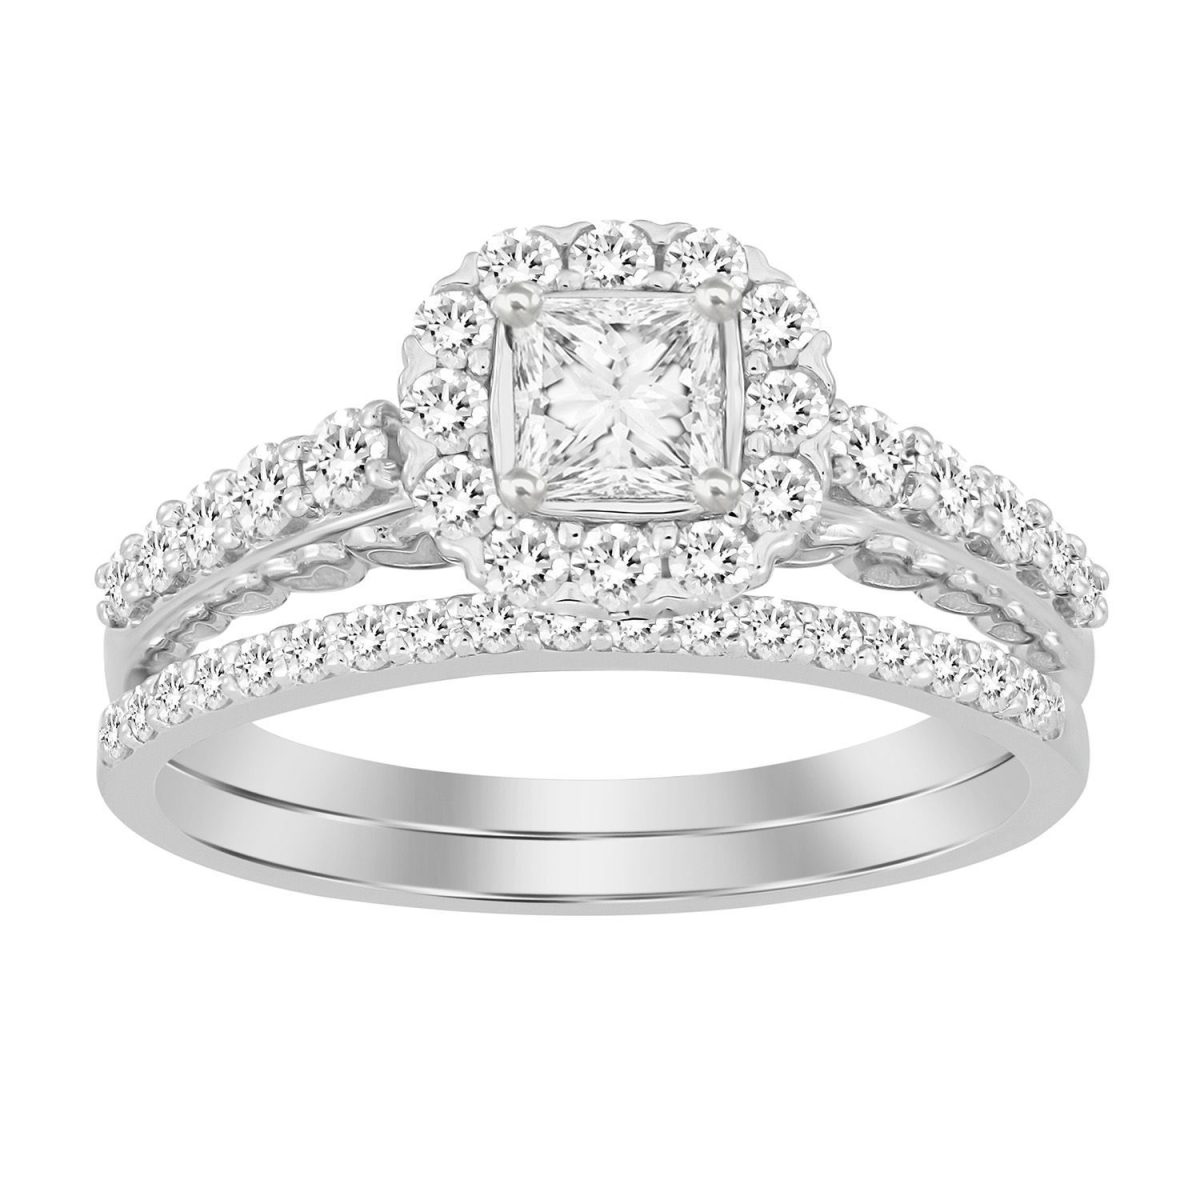 0011896 ladies bridal ring set 1 ct roundprincess diamond 14k white gold